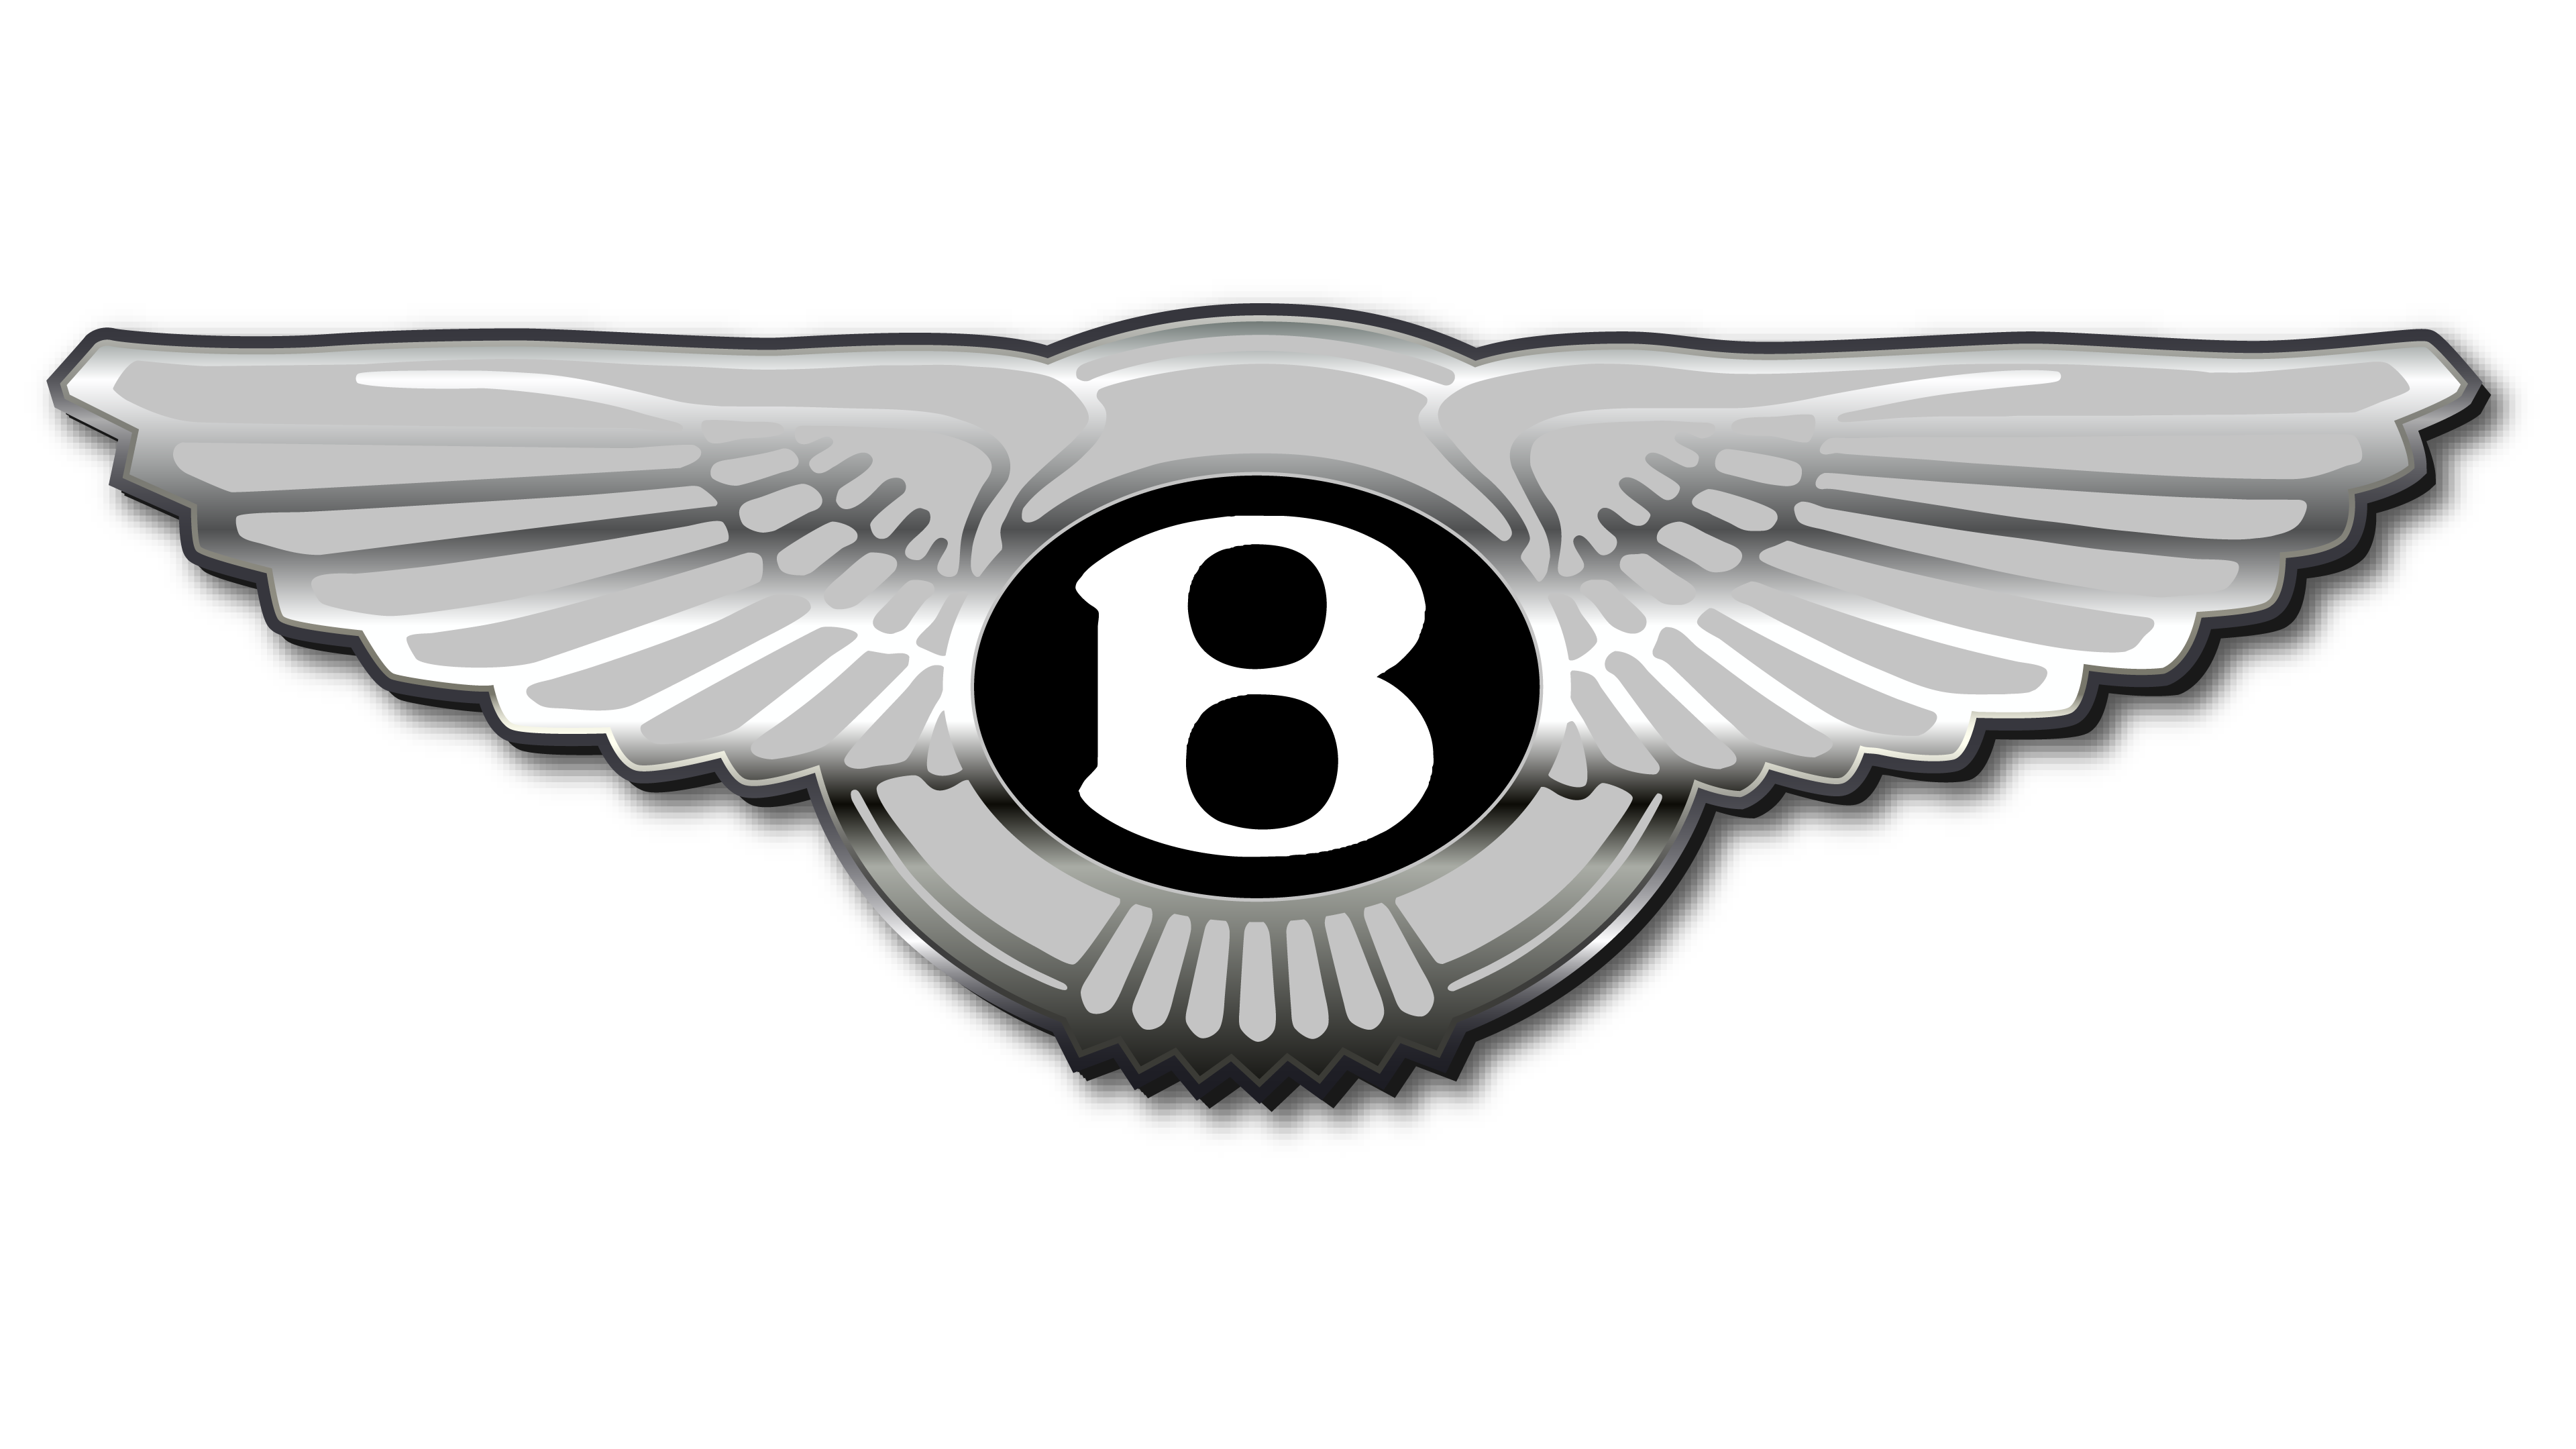 Bentley Motors Limited Car Lu